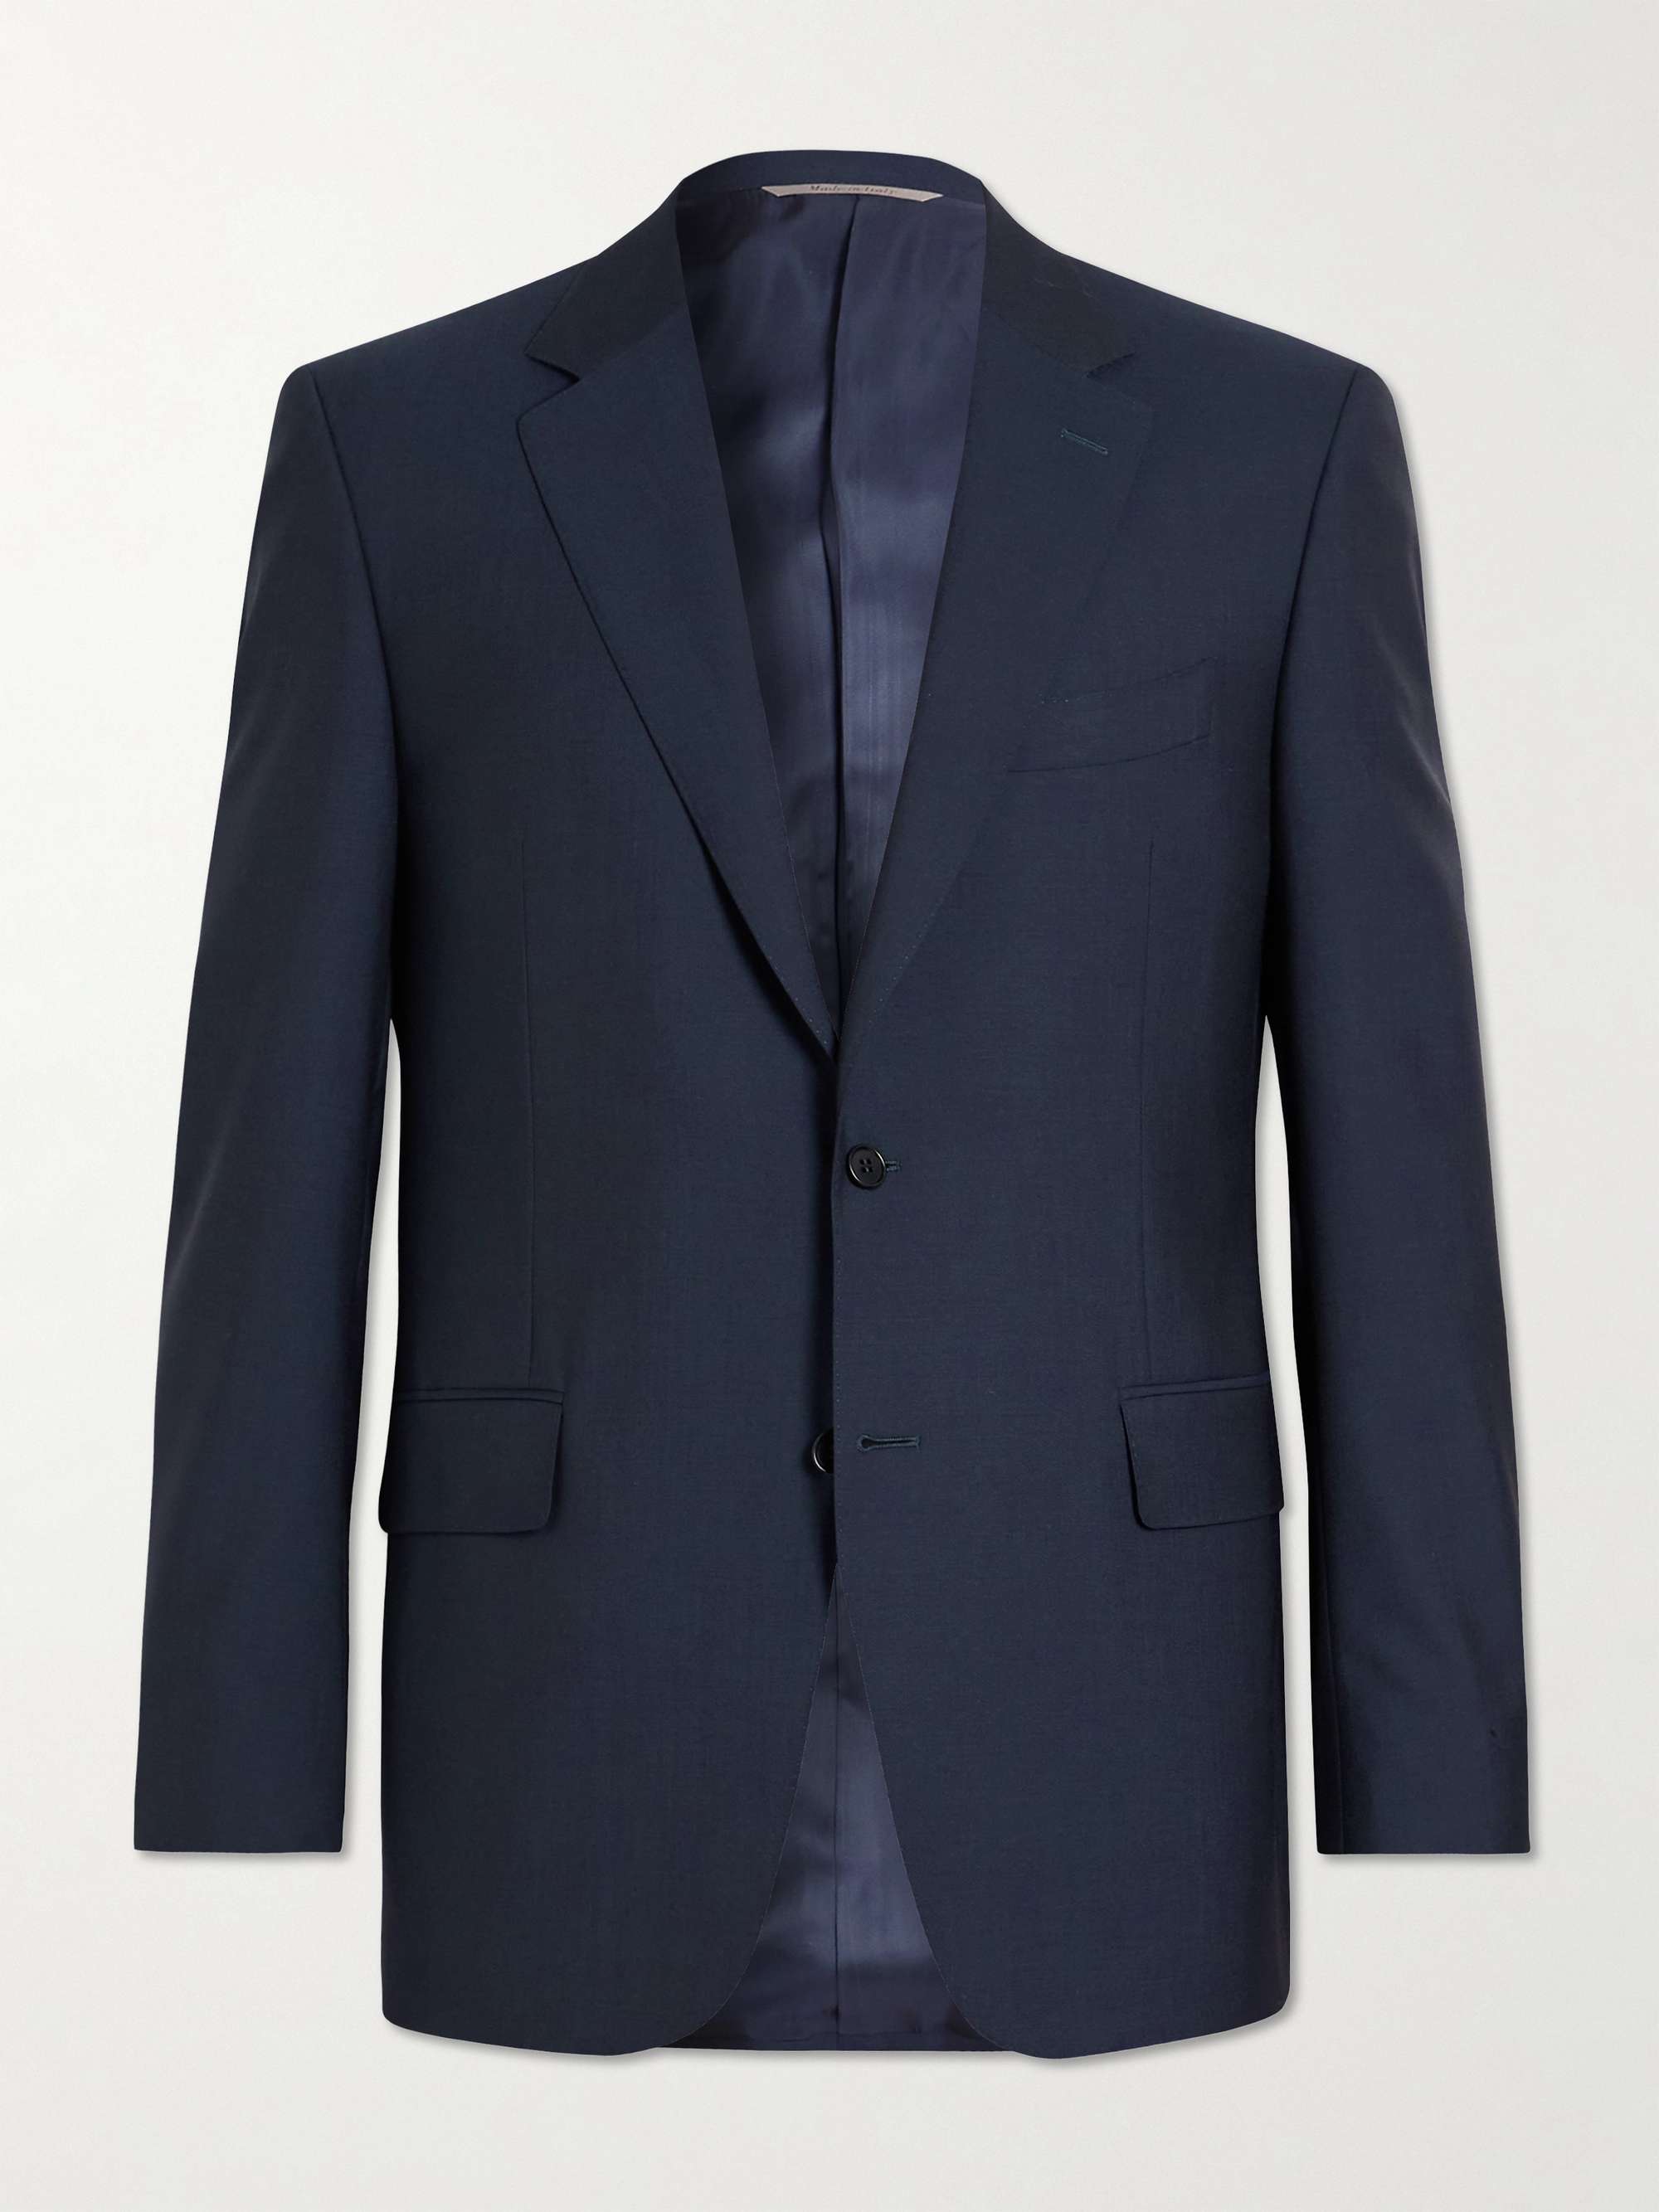 CANALI Slim-Fit Wool Suit Jacket for Men